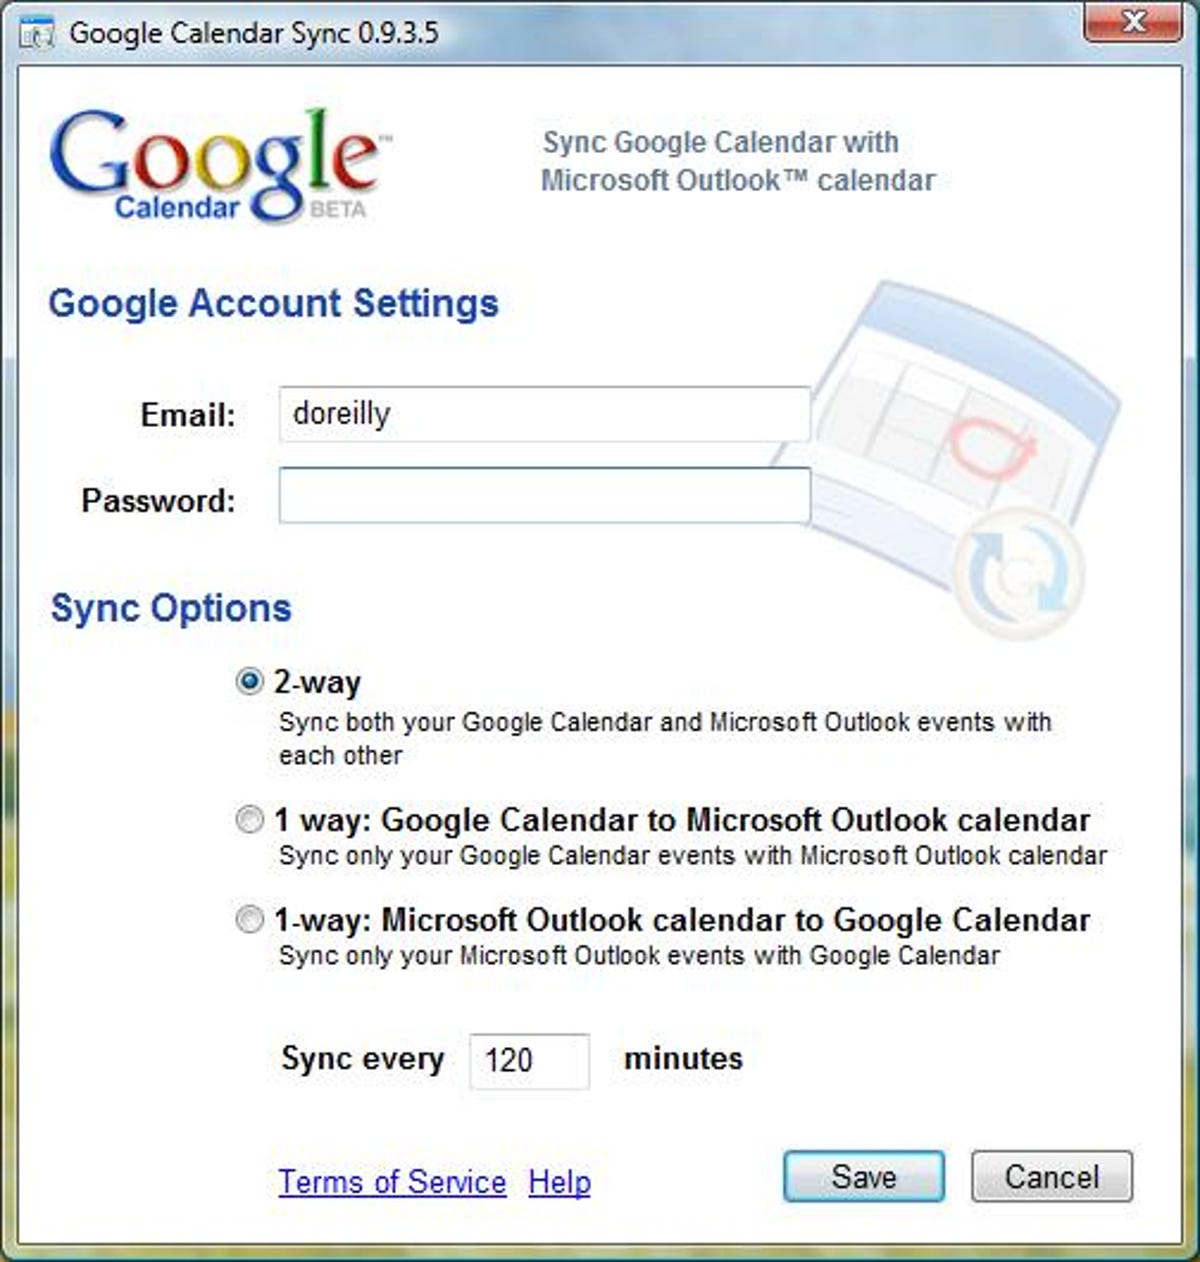 Google Calendar Sync settings